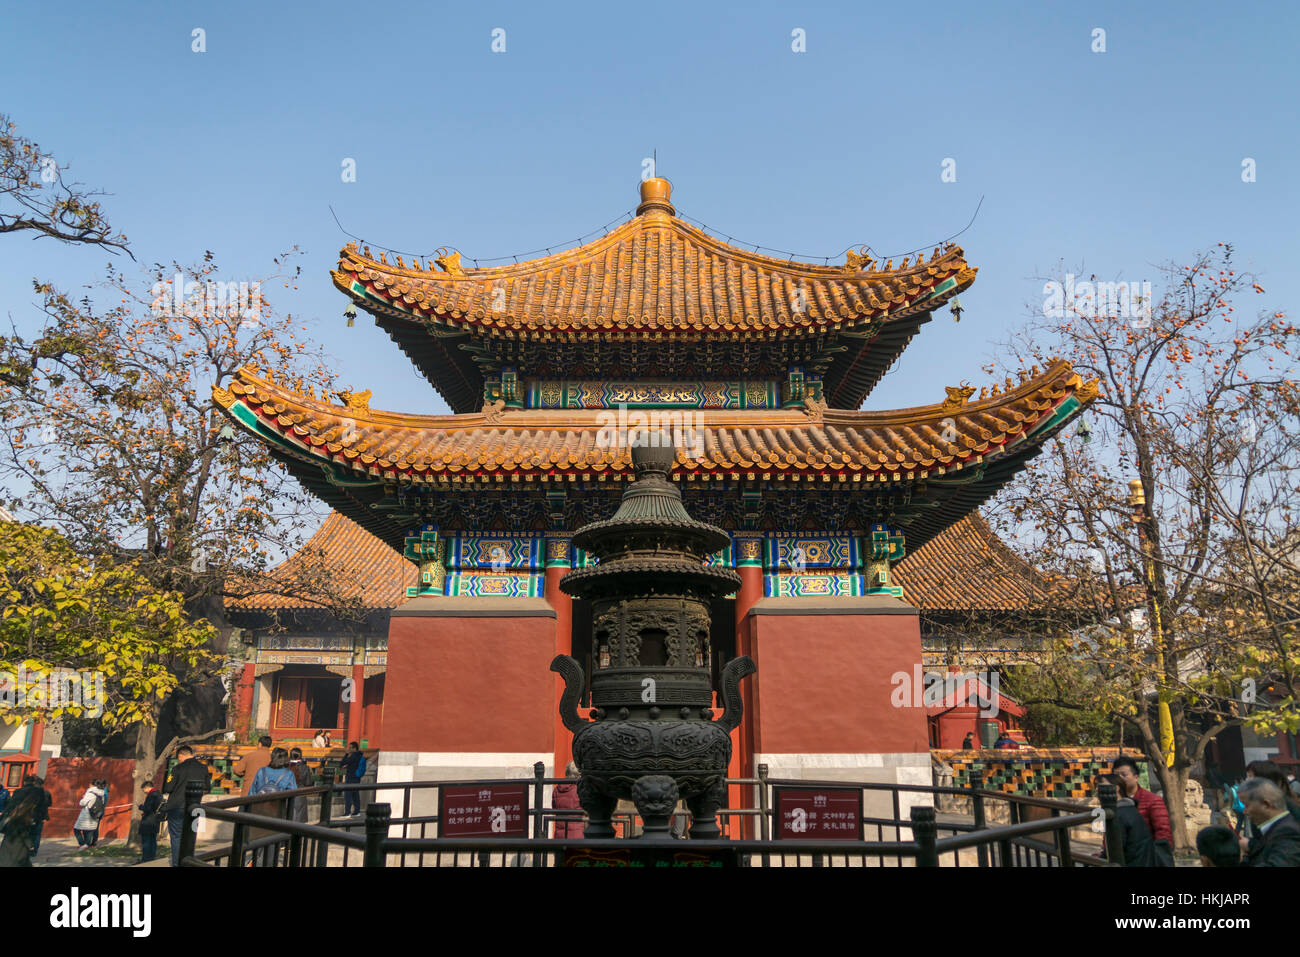 Lamatempel oder Yonghe-Tempel, Peking /  Beijing, Volksrepublik China, Asien  |  Yonghe or Lama Temple in Beijing, People's Republic of China, Asia Stock Photo